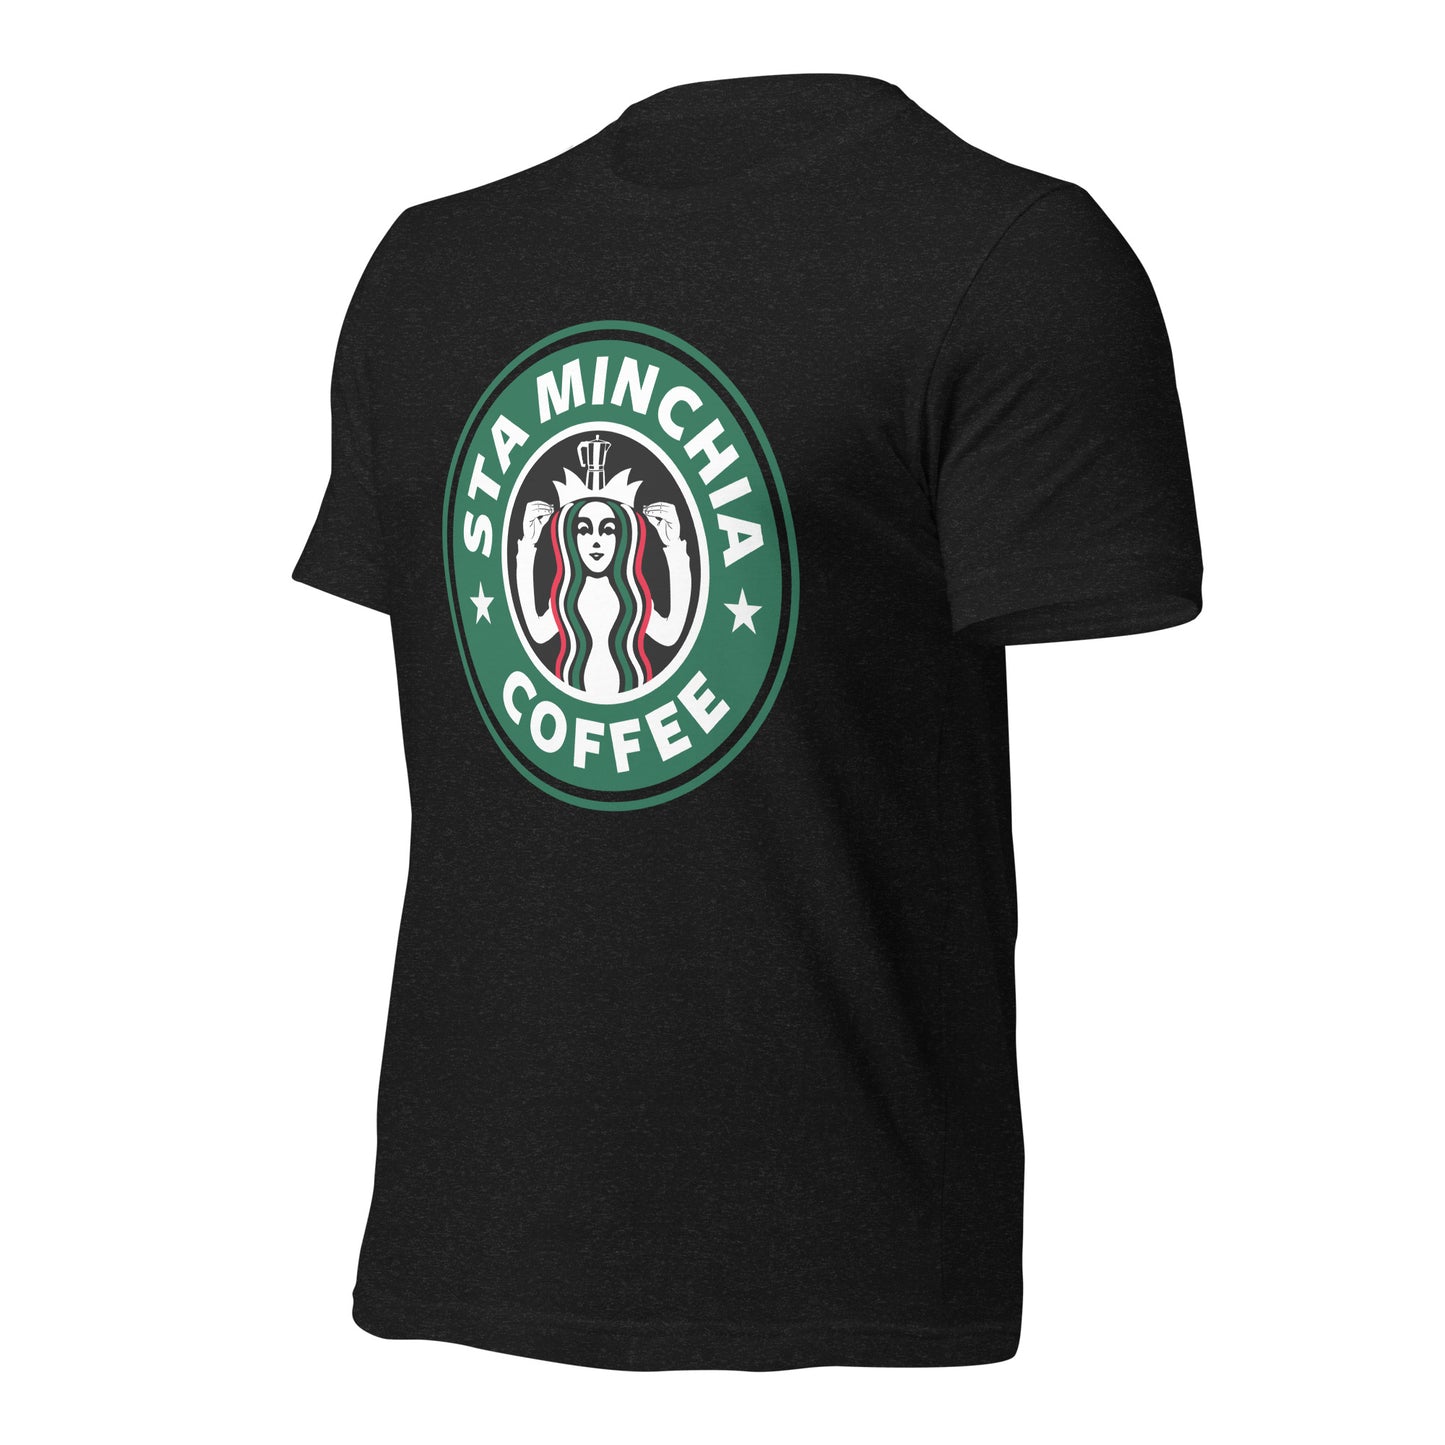 Sta Minchia Coffee - Unisex t-shirt